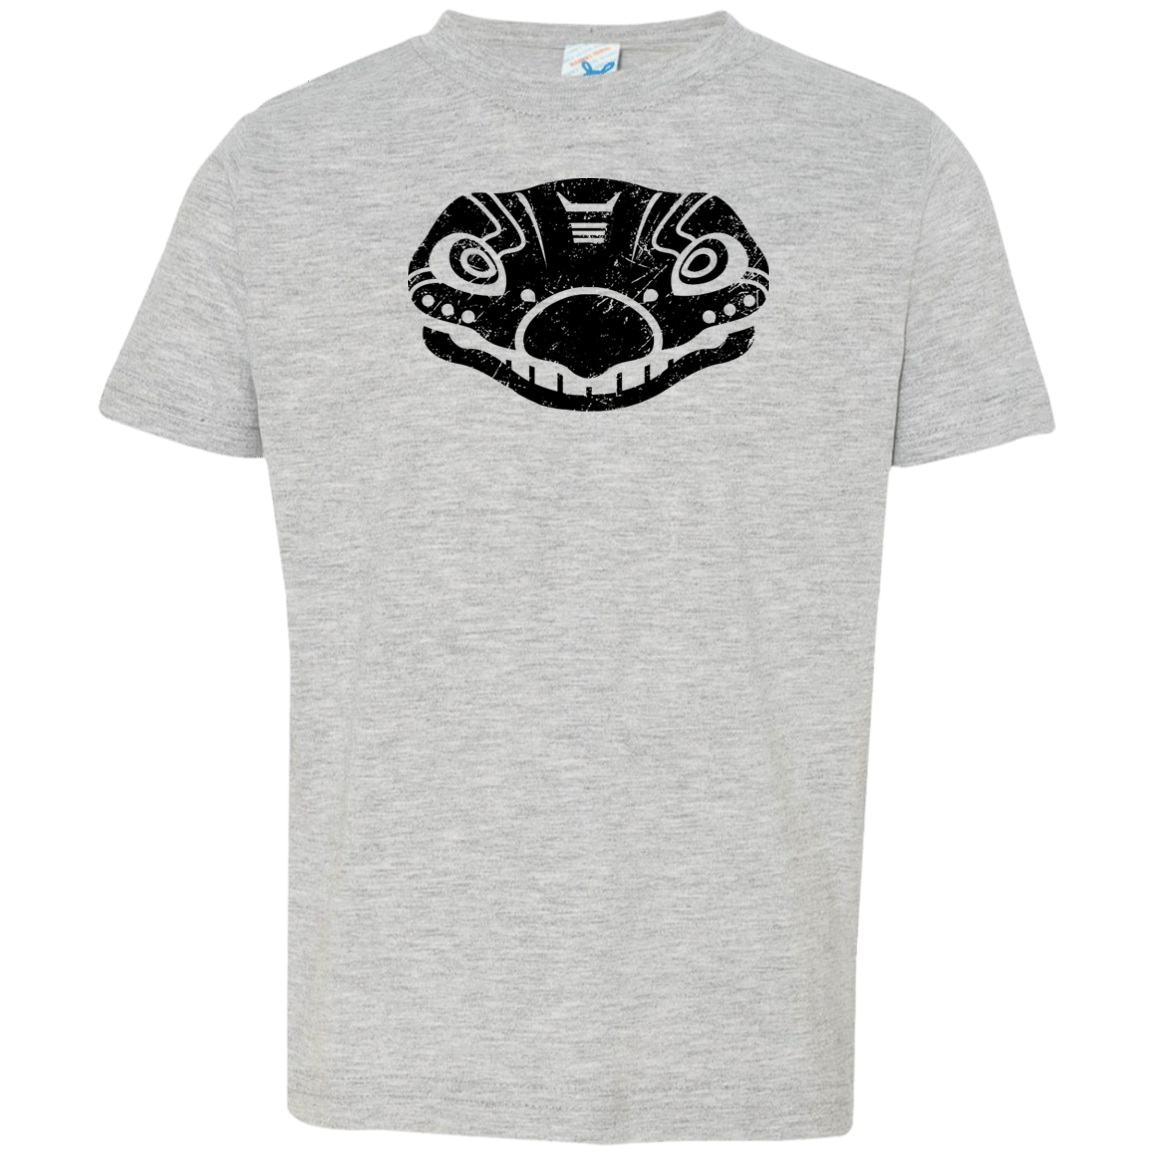 Black Distressed Emblem T-Shirt for Toddlers (Stegosaurus/Bones)